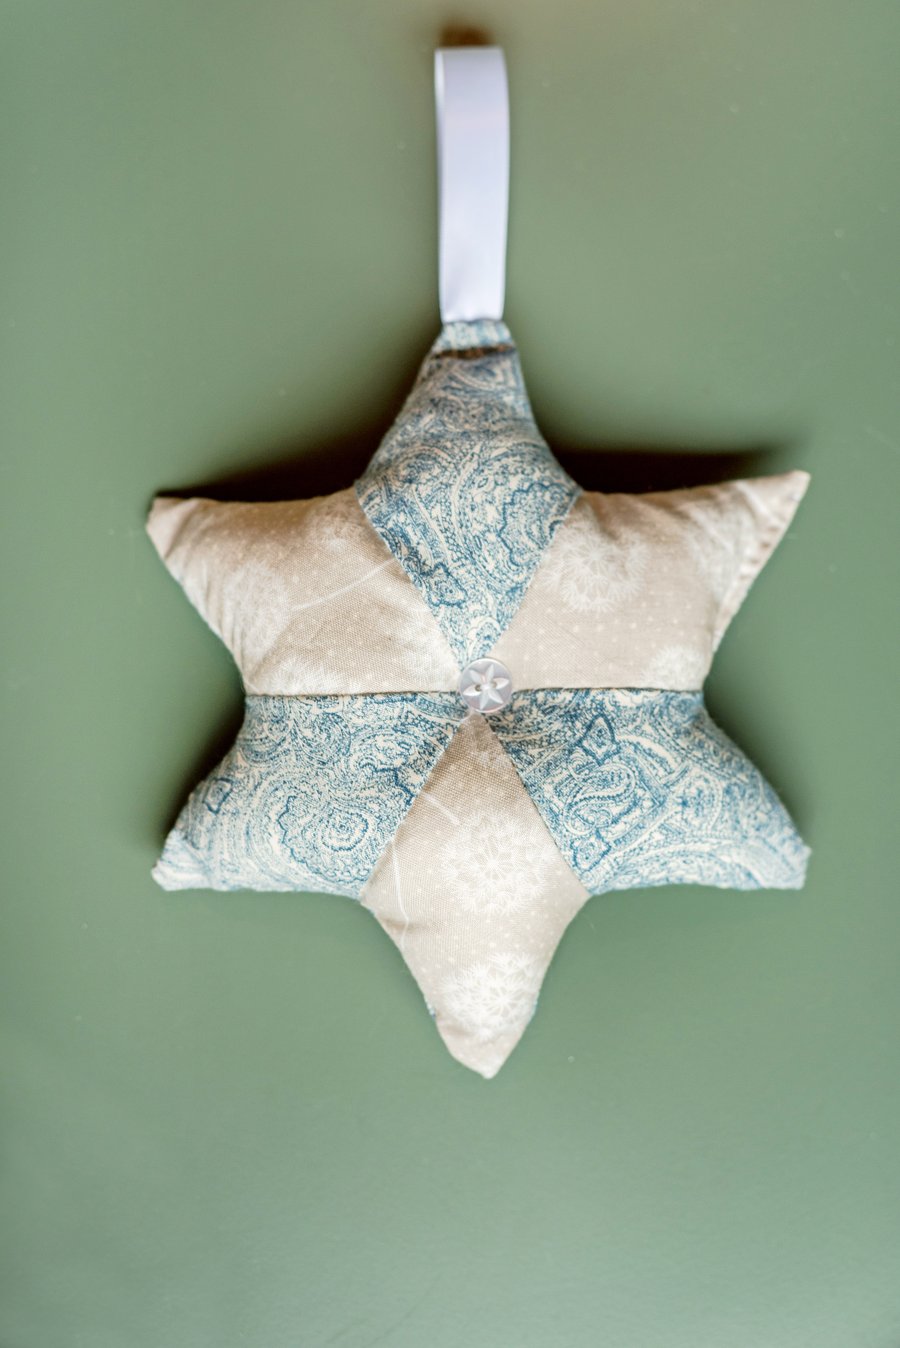 Scandi style star-shaped Christmas decoration